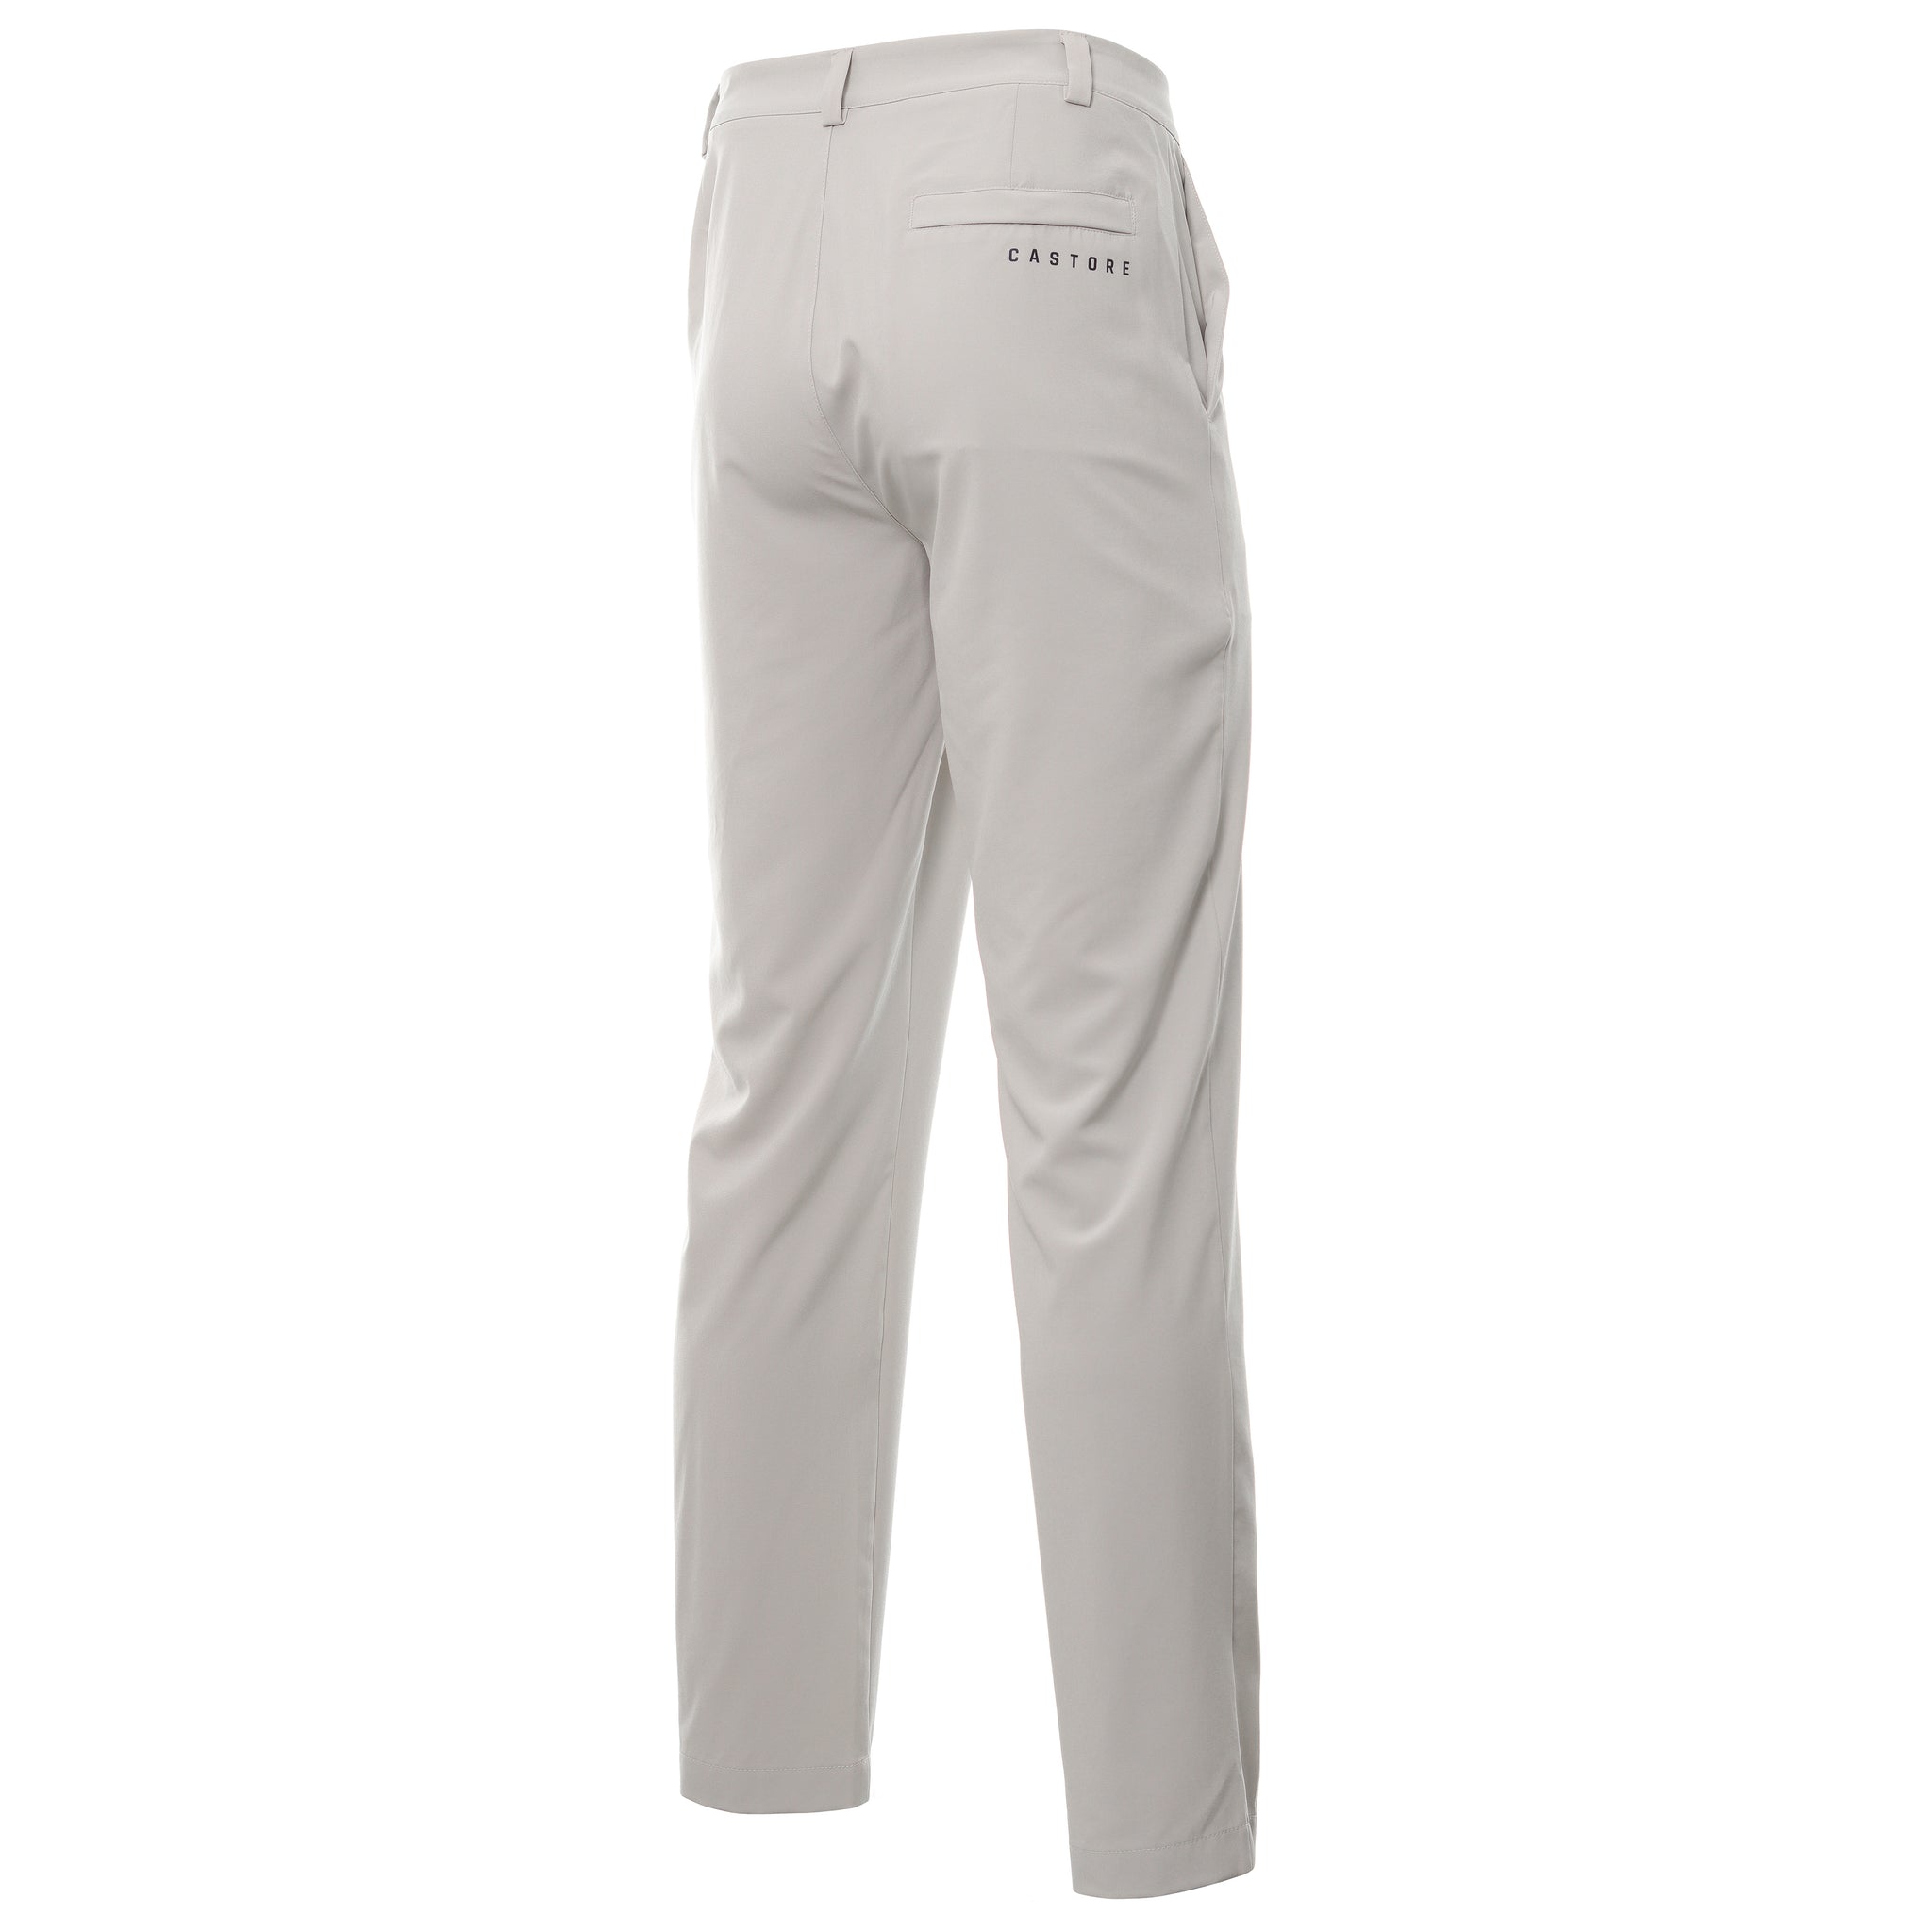 castore-essential-golf-trousers-cma10065-stone-grey